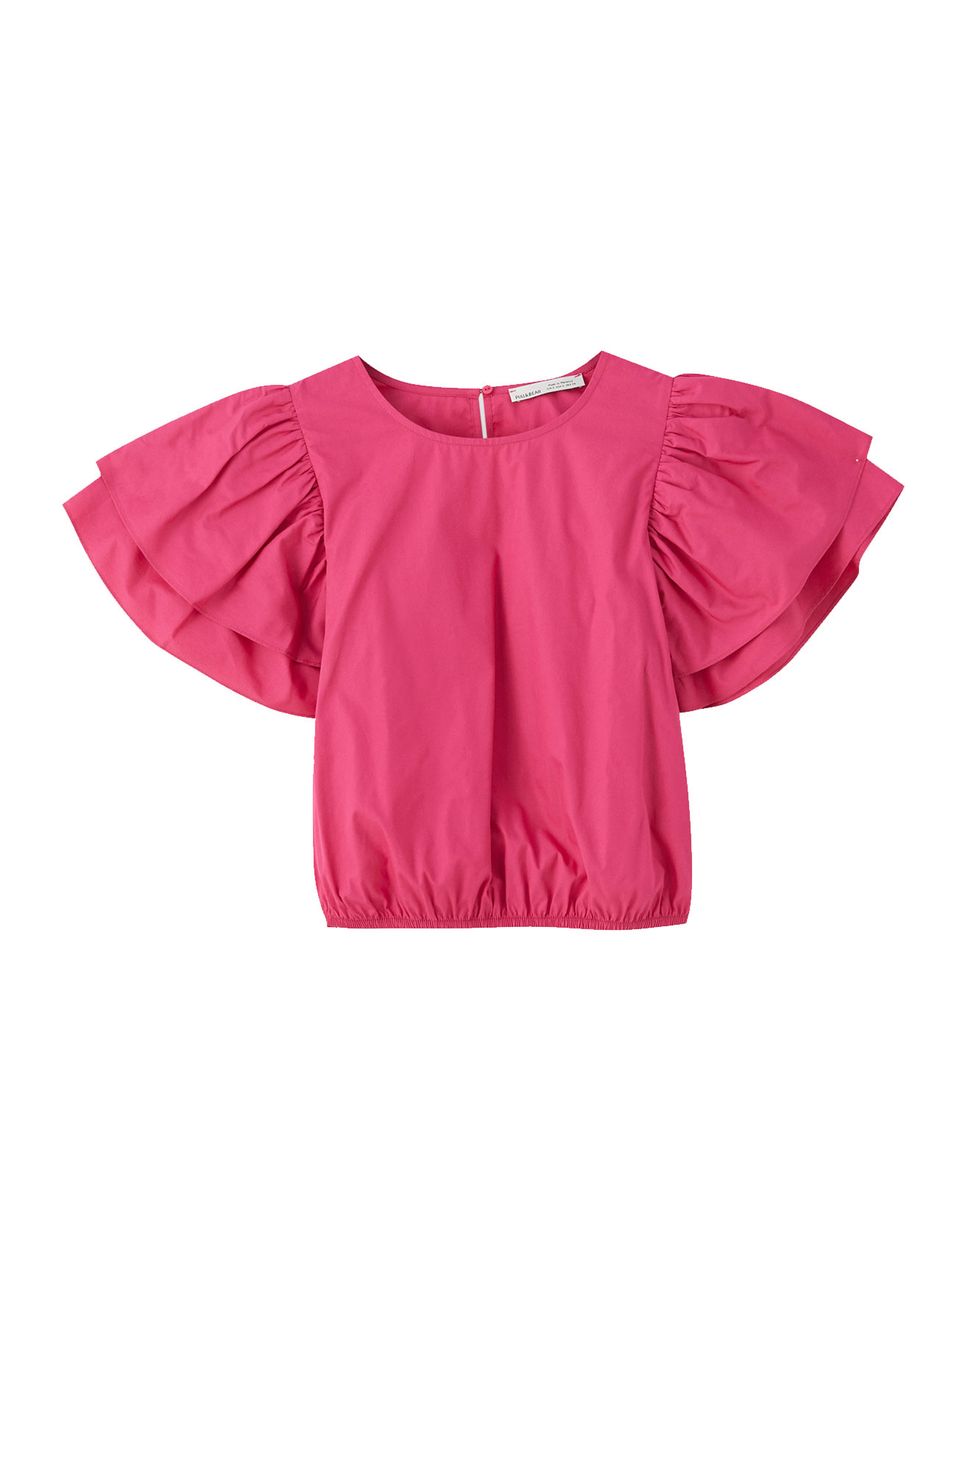 Clothing, Pink, Sleeve, Magenta, Blouse, T-shirt, Crop top, Outerwear, Top, Shirt, 